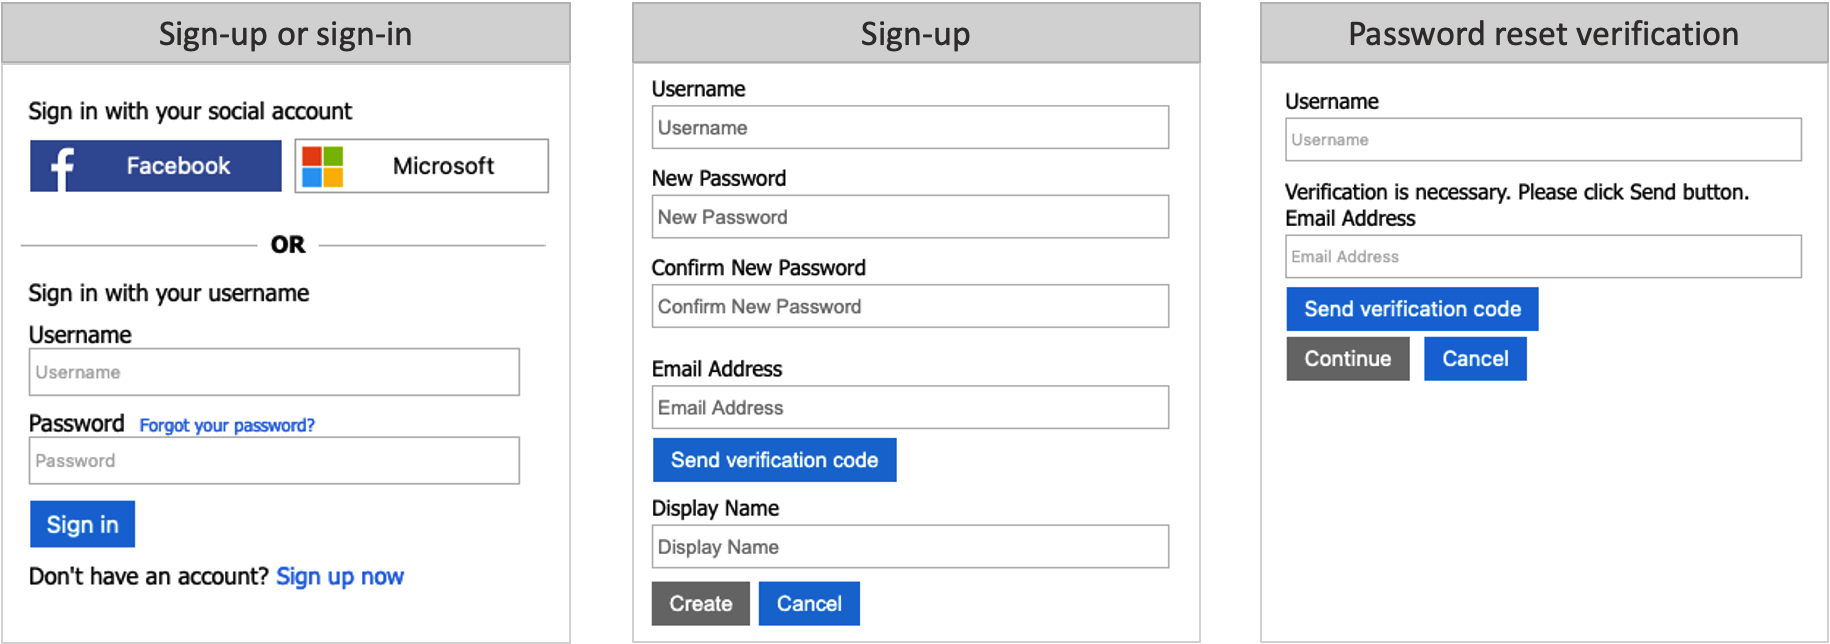 Username, Sign in